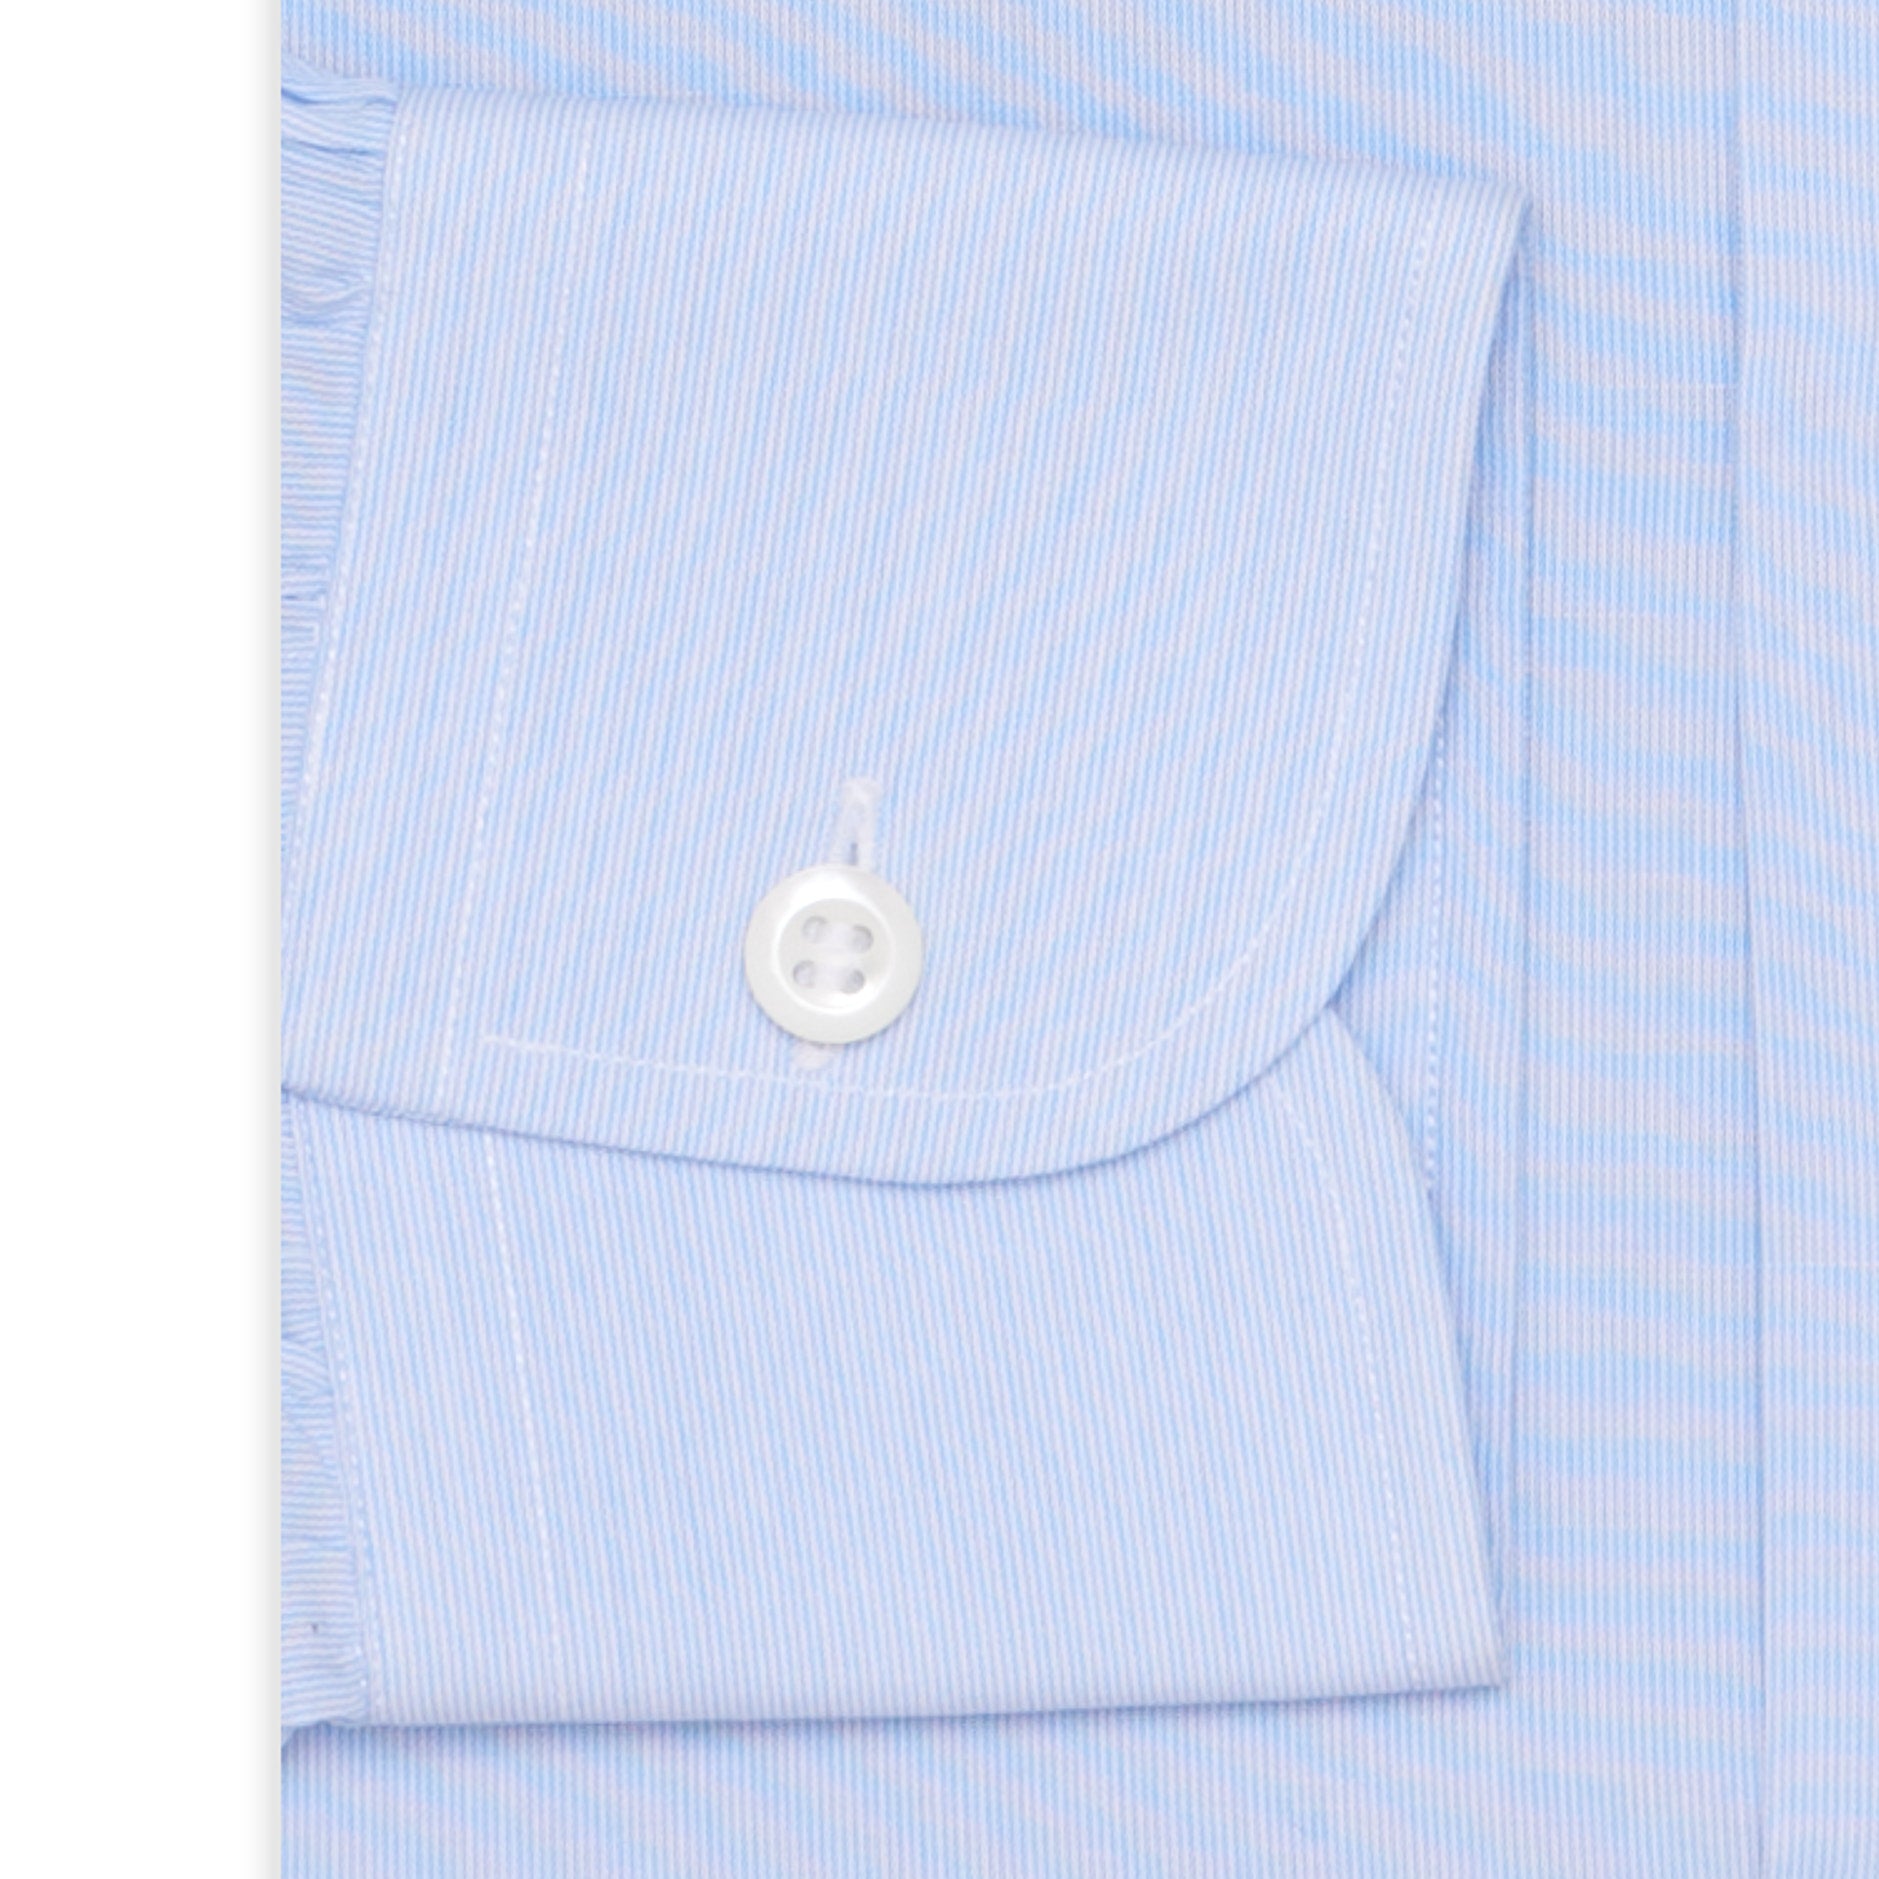 BESPOKE ATHENS Handmade Light Blue Hairline Striped Cotton Shirt NEW Slim Fit BESPOKE ATHENS